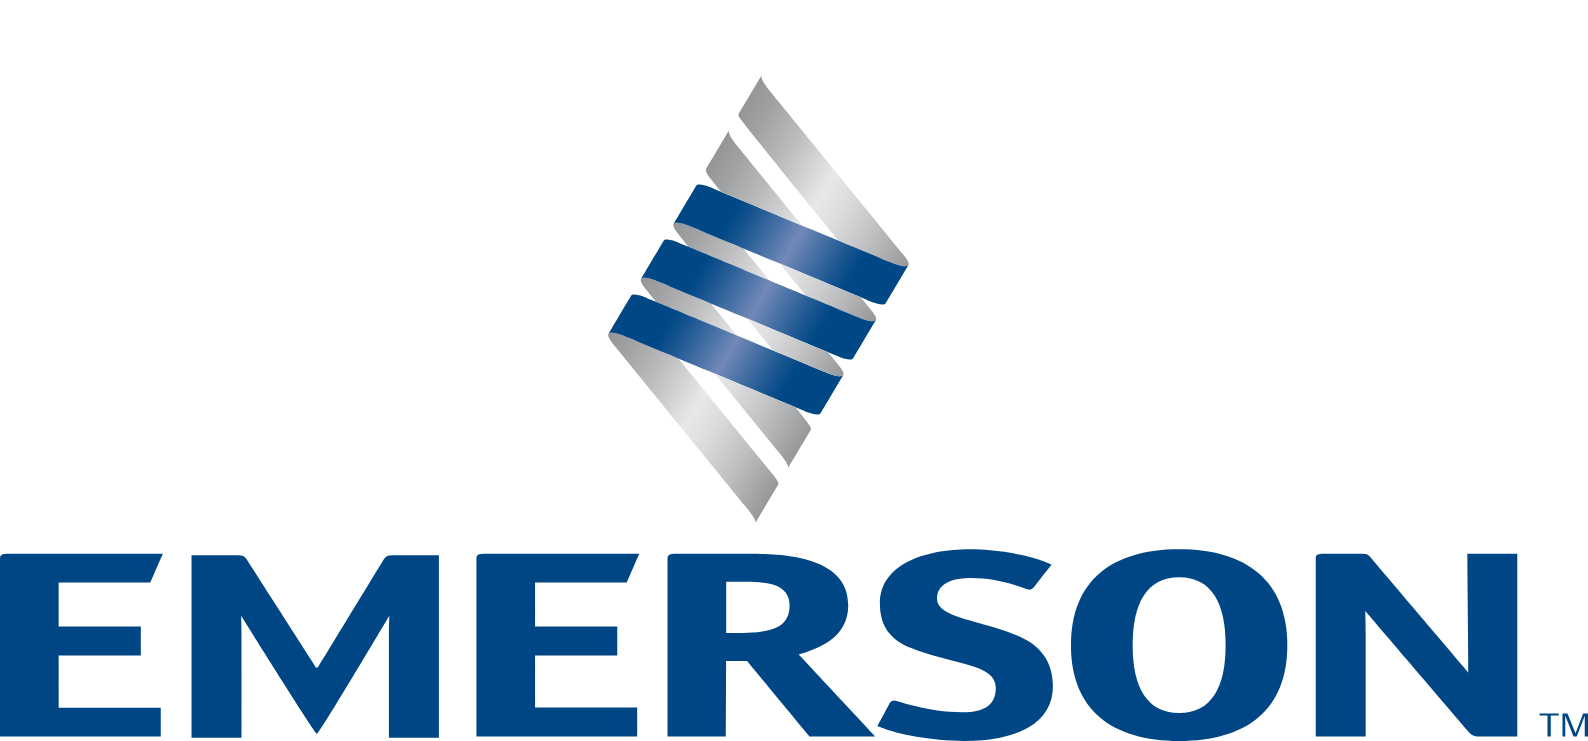 Emerson logo large (transparent PNG)